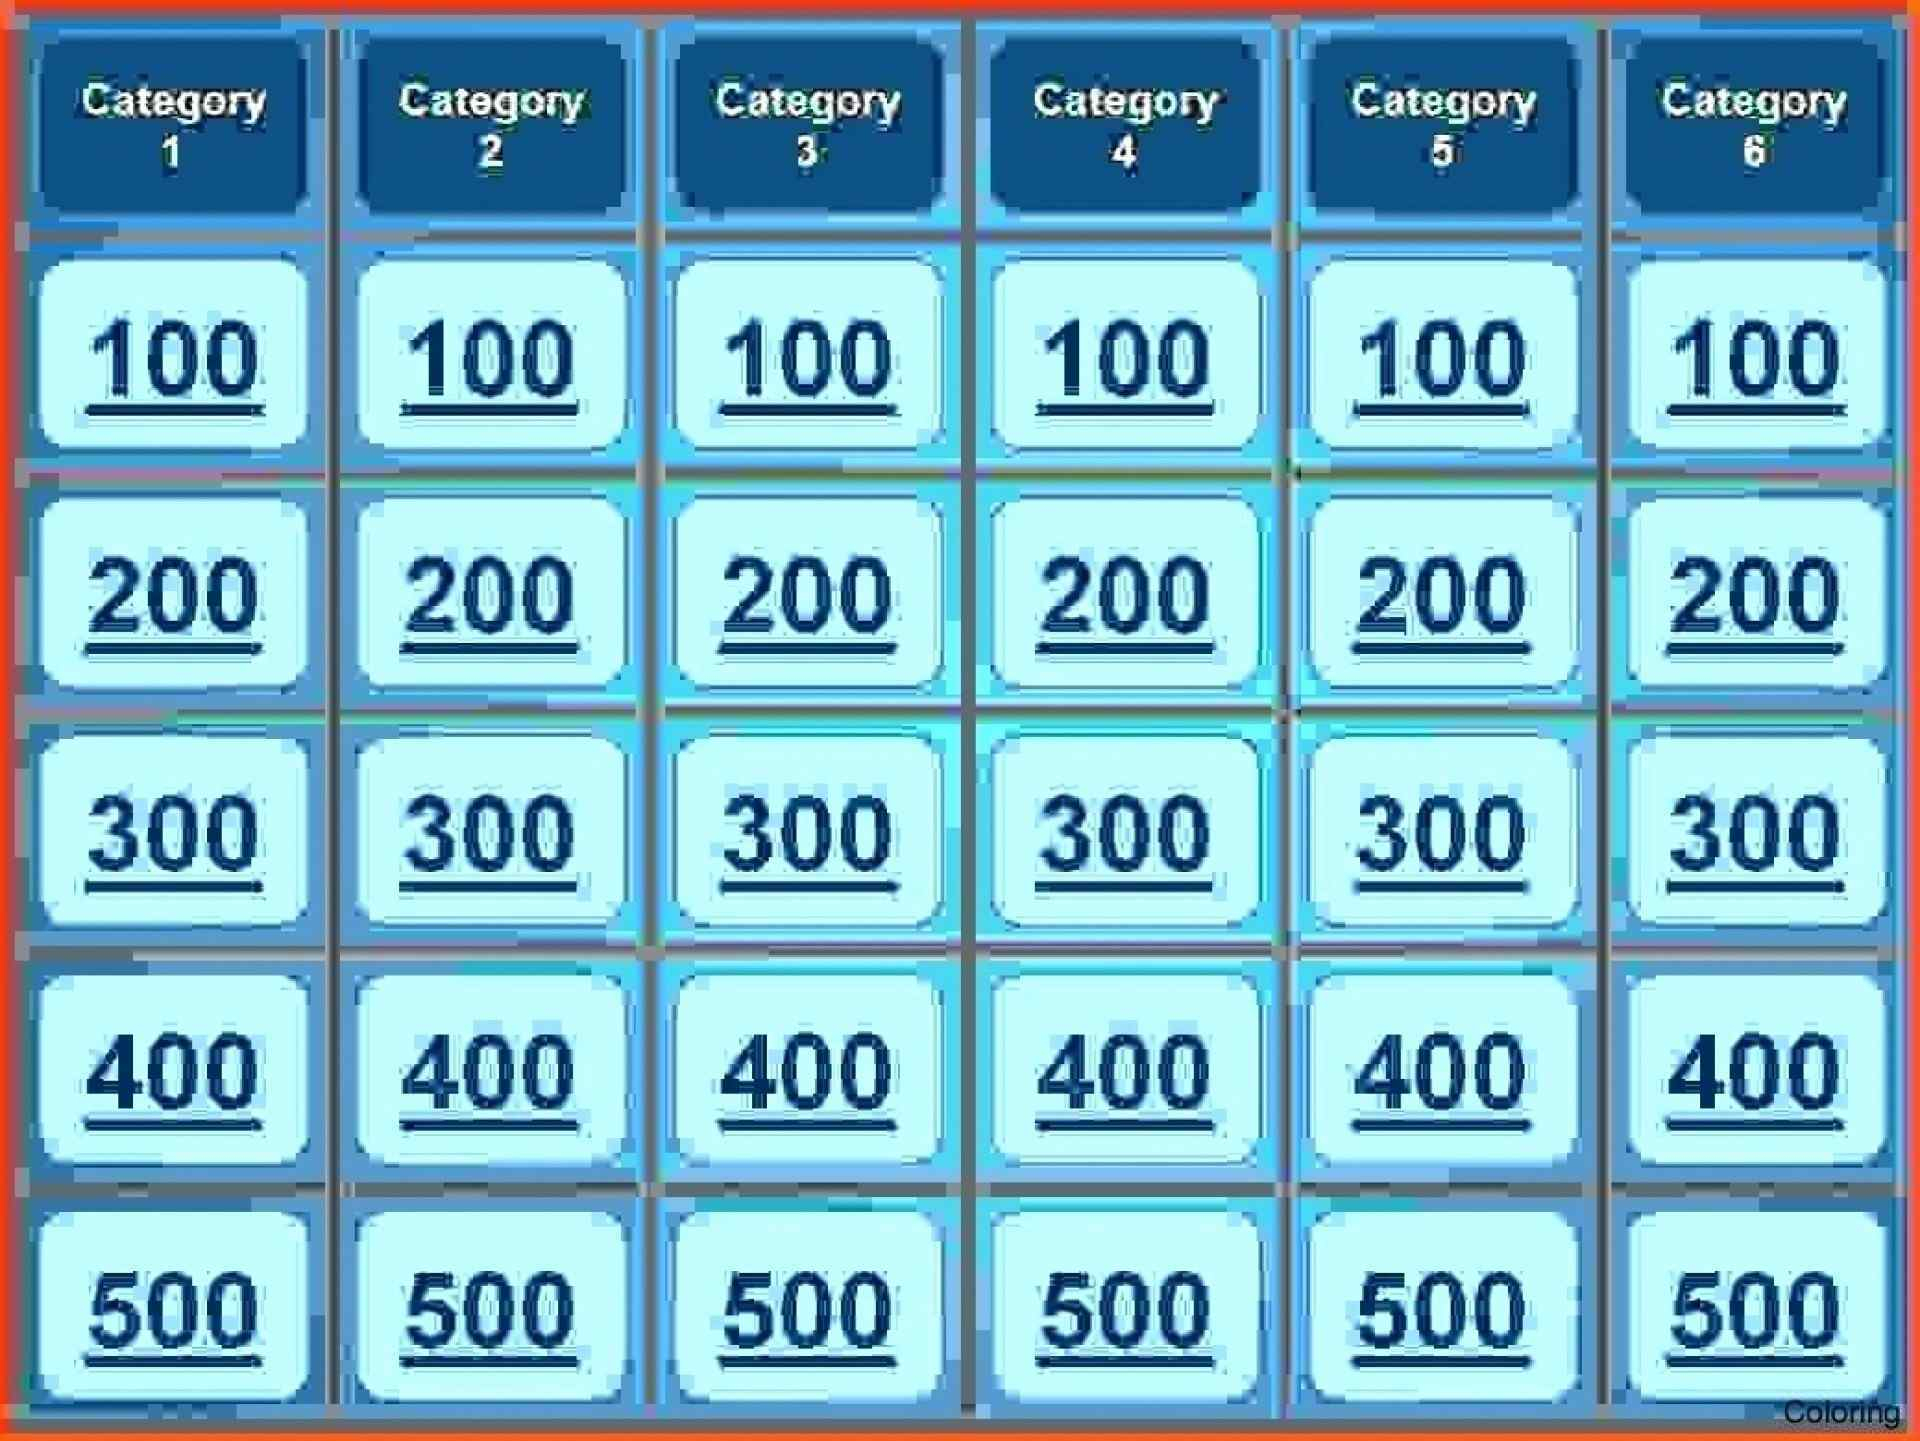 Free Printable Jeopardy Template